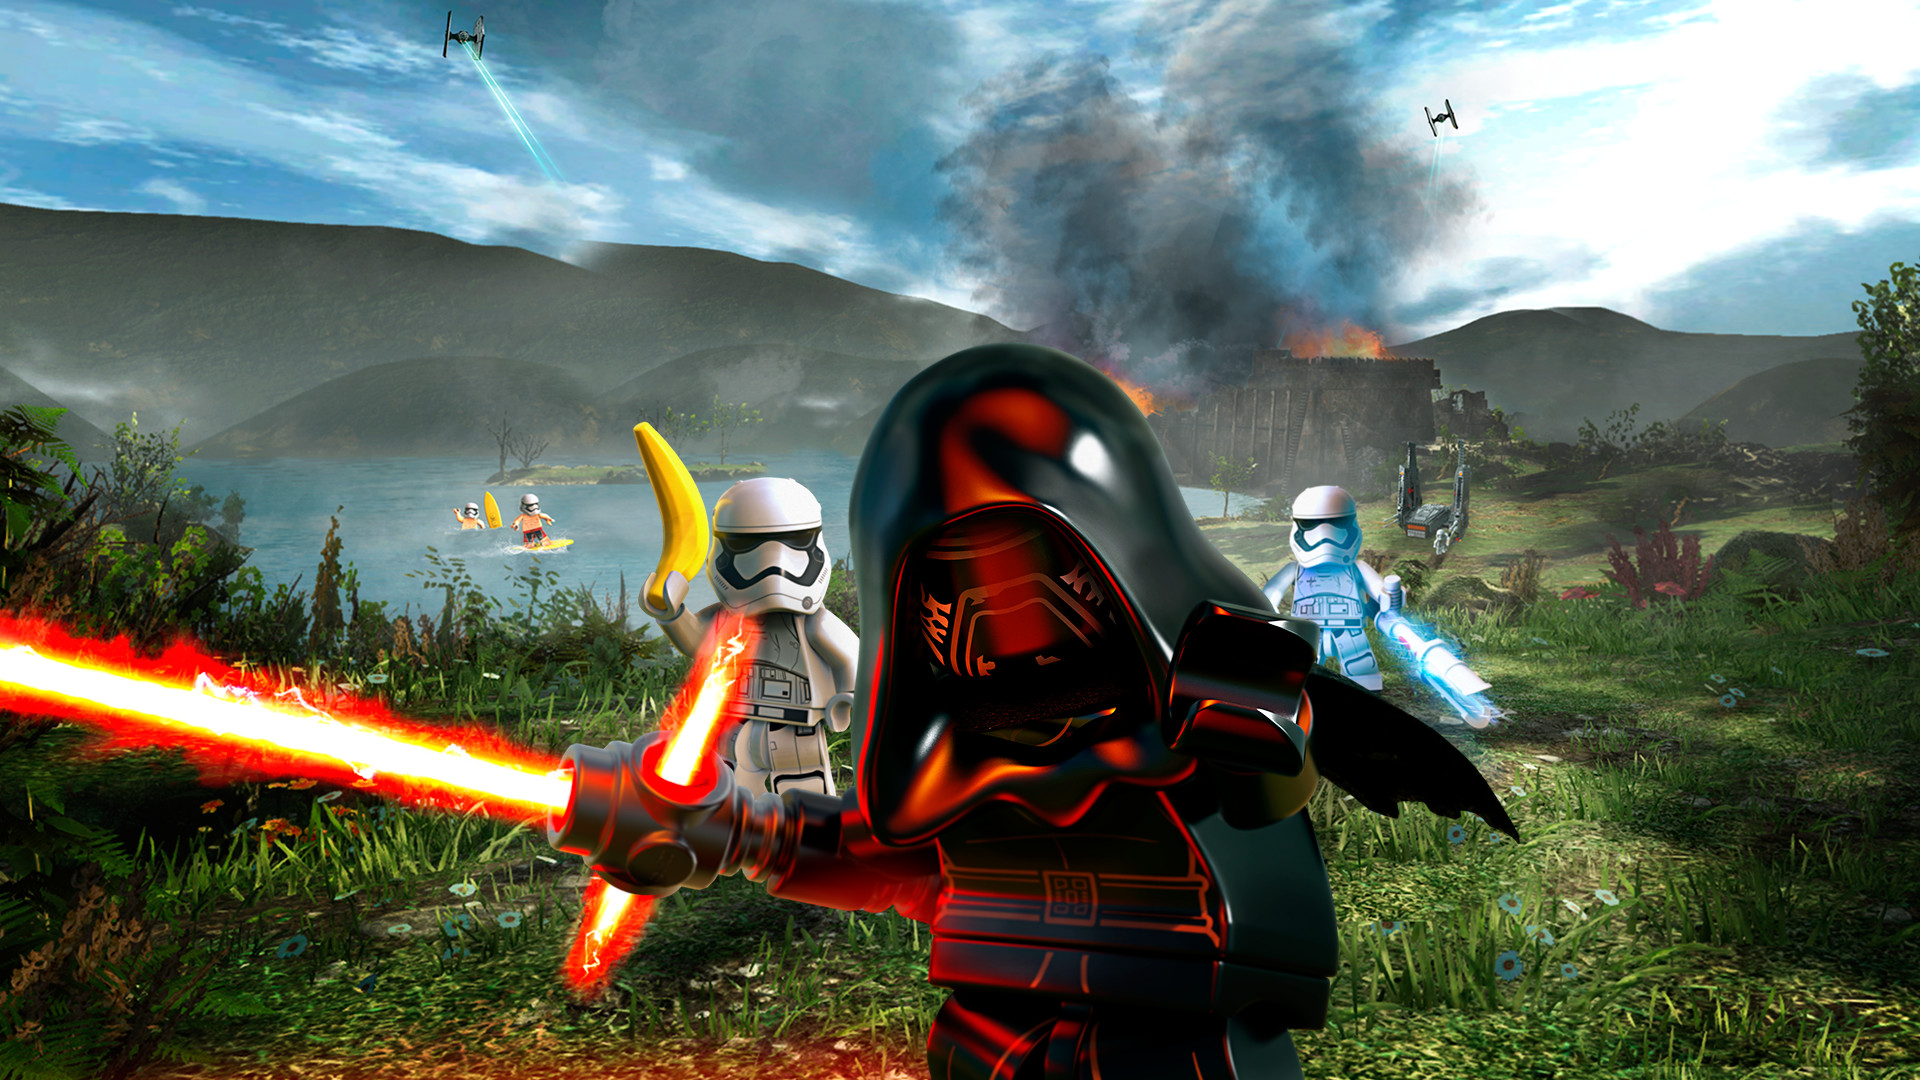 LEGO Star Wars: The Force Awakens - First Order Siege of Takodana Level Pack DLC Steam CD Key 2.25 usd